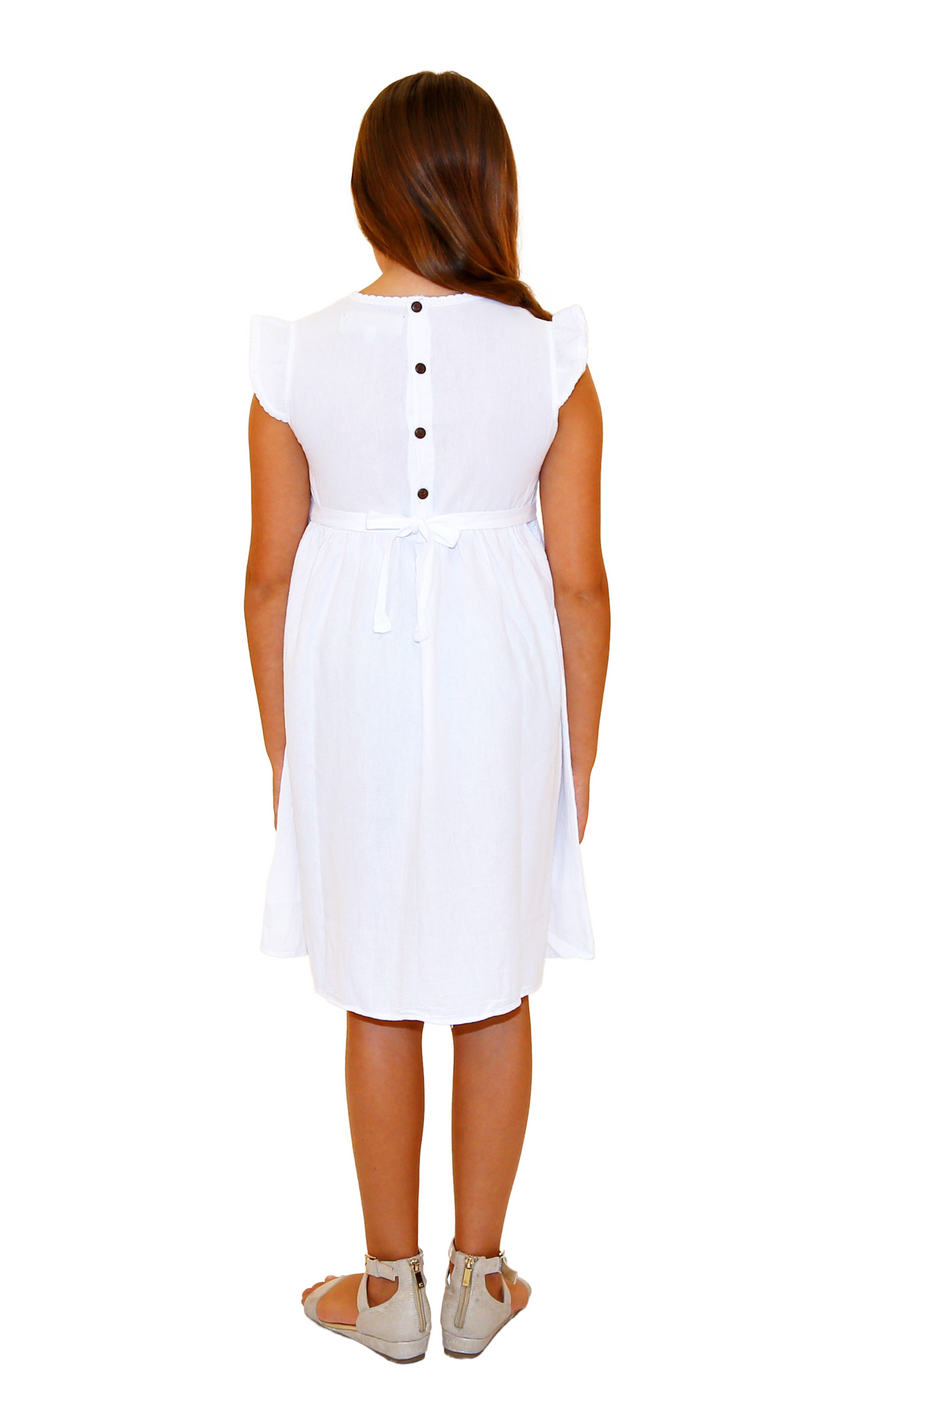 G1002 - White Cotton Dress